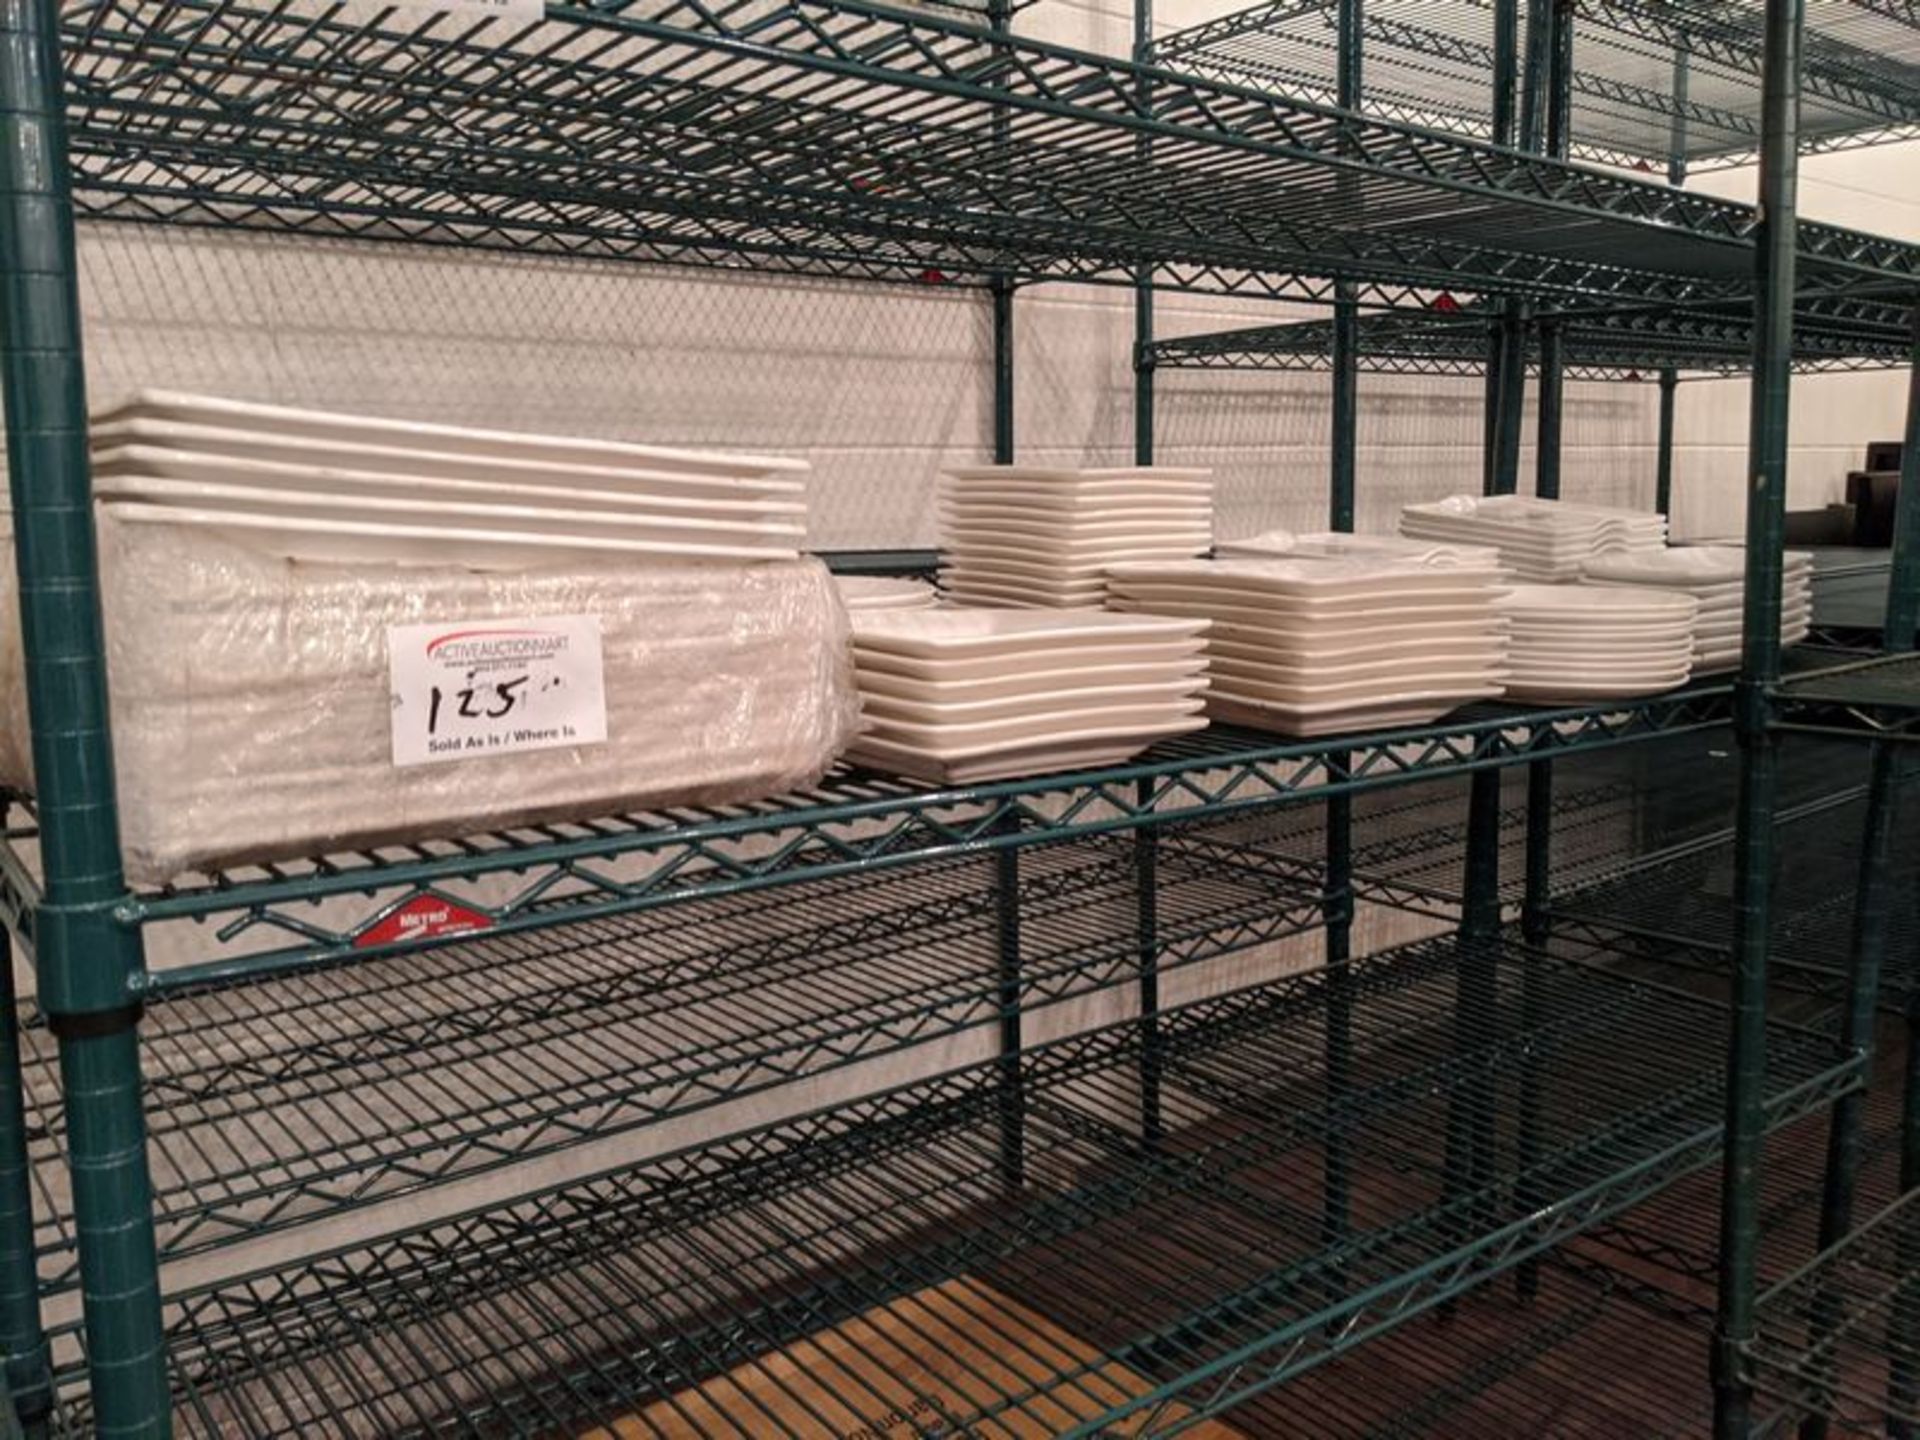 Shelf lot of Dishes